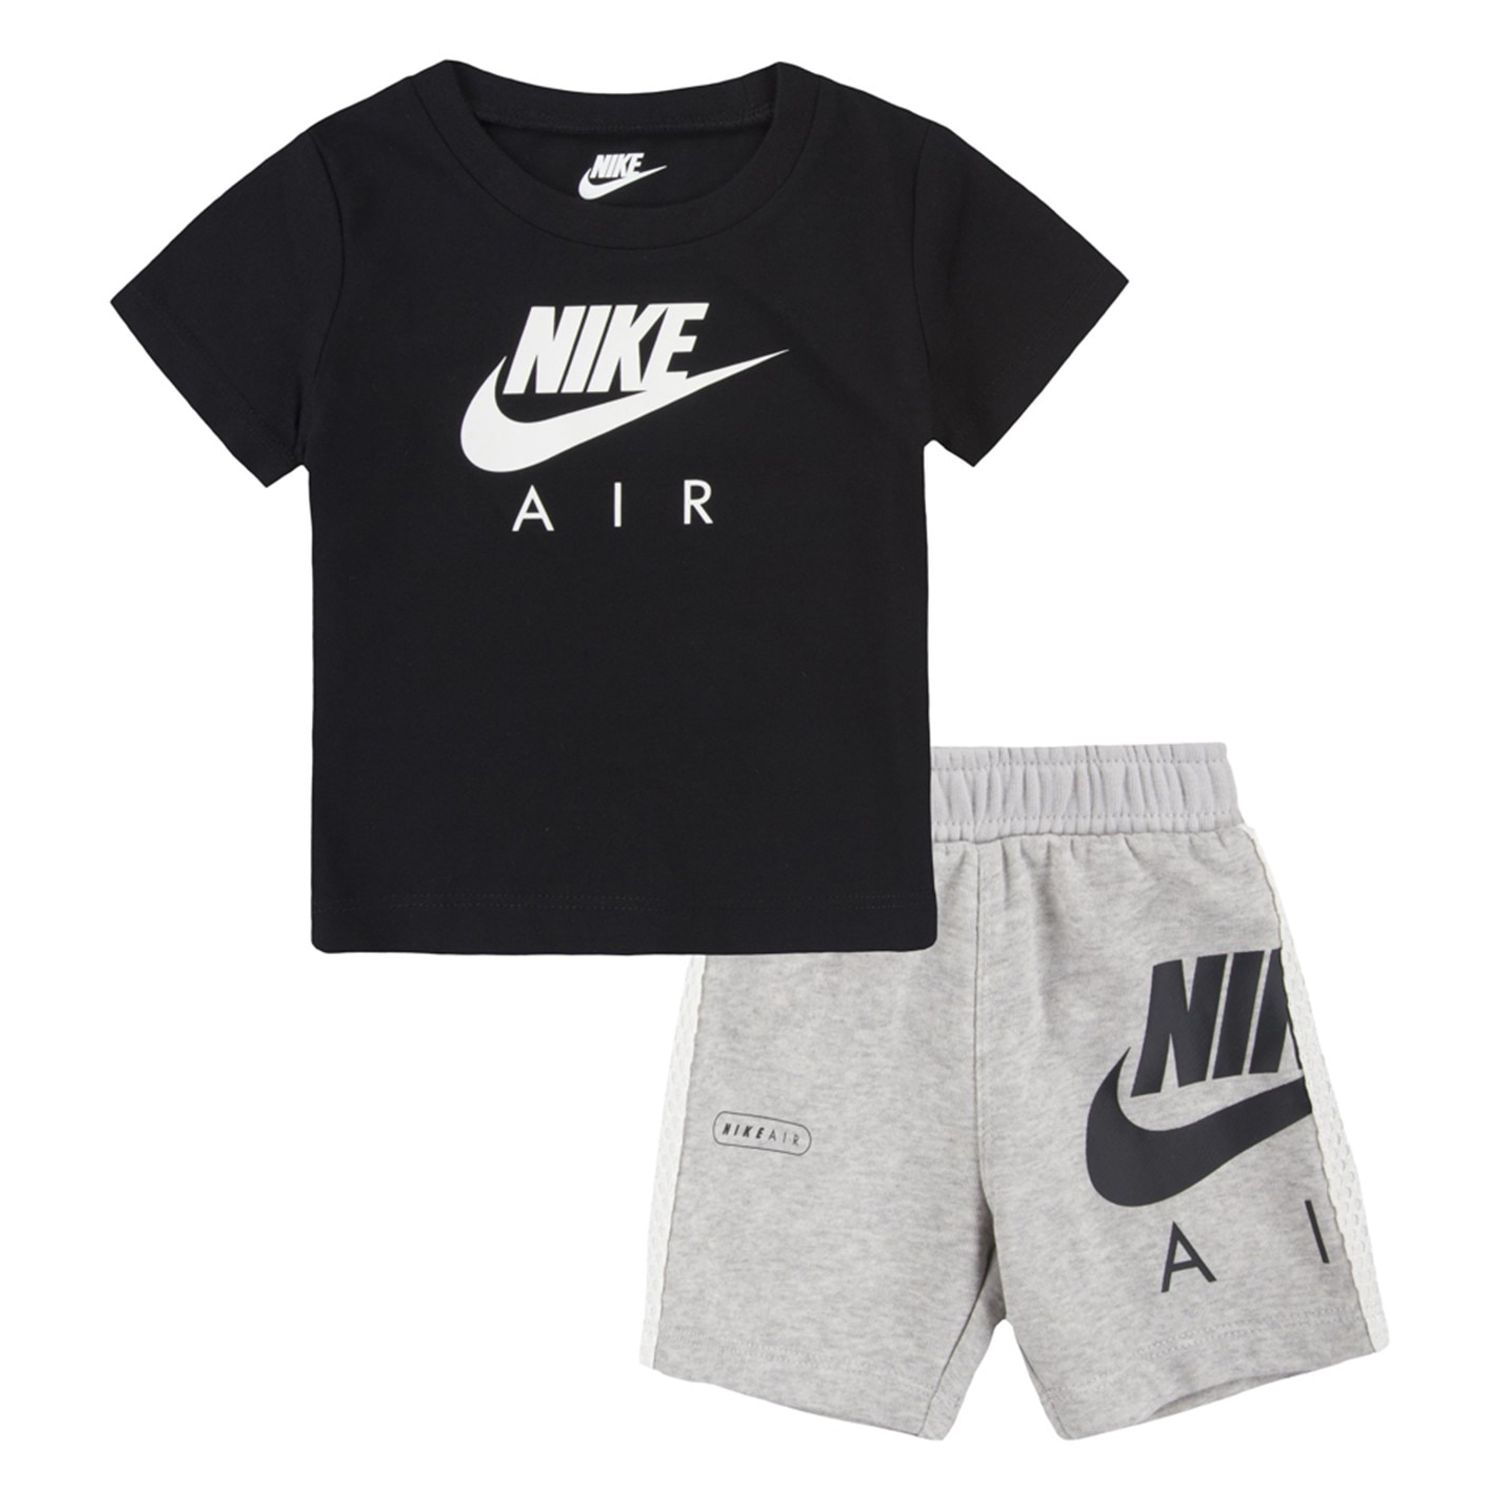 Black Nike Boys Shorts Set - T-shirt/Shorts - Get The Label